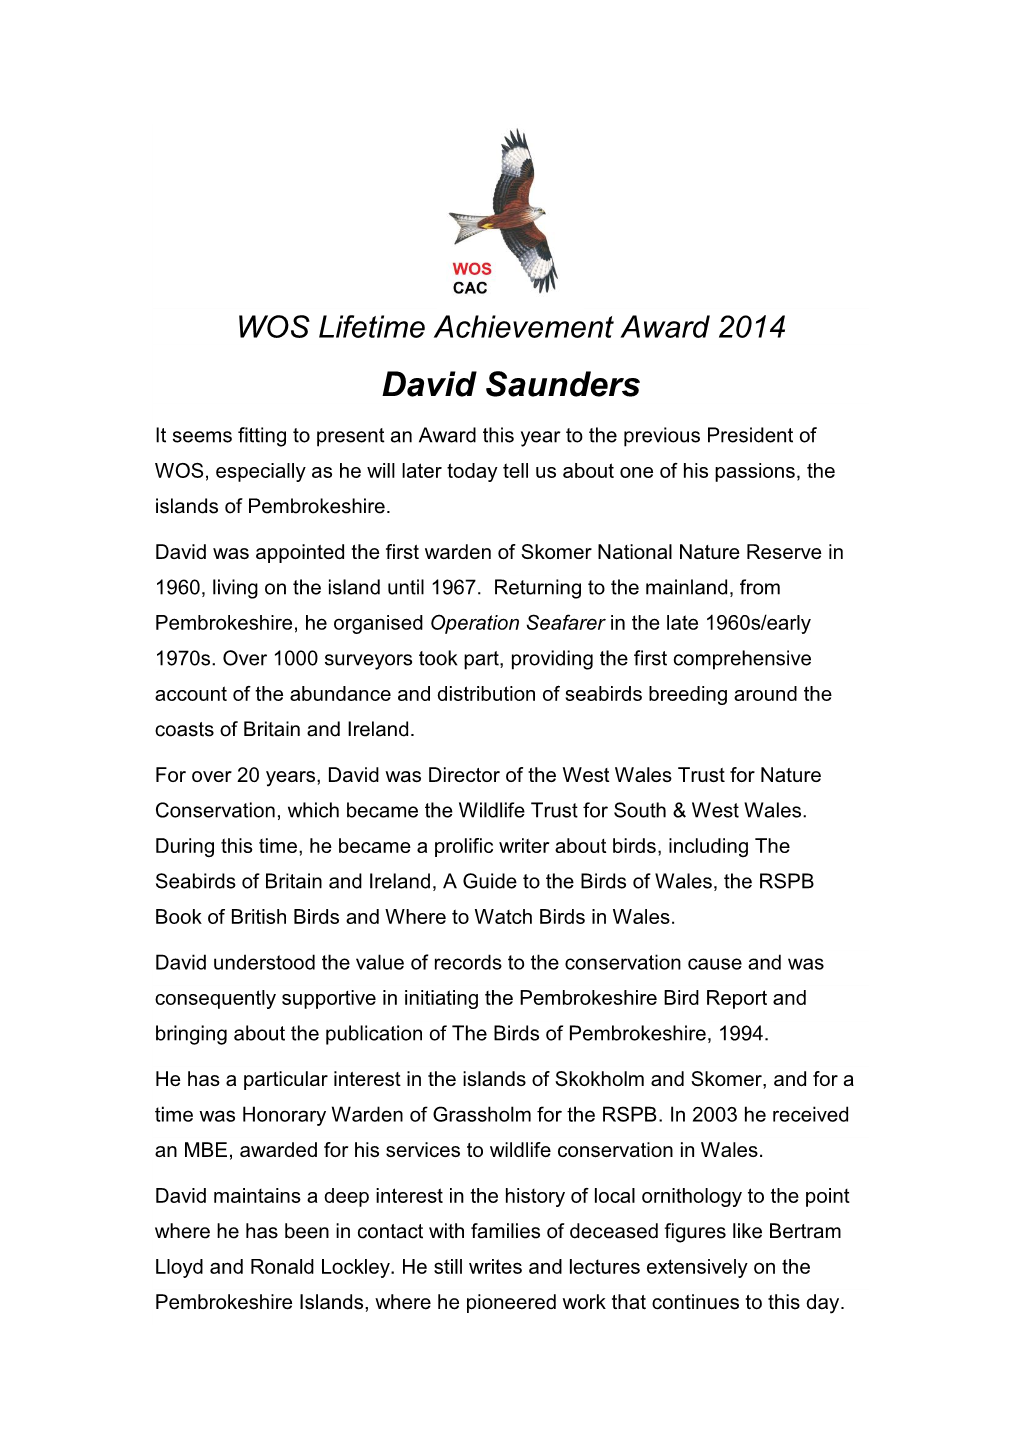 WOS Lifetime Achievement Award 2012